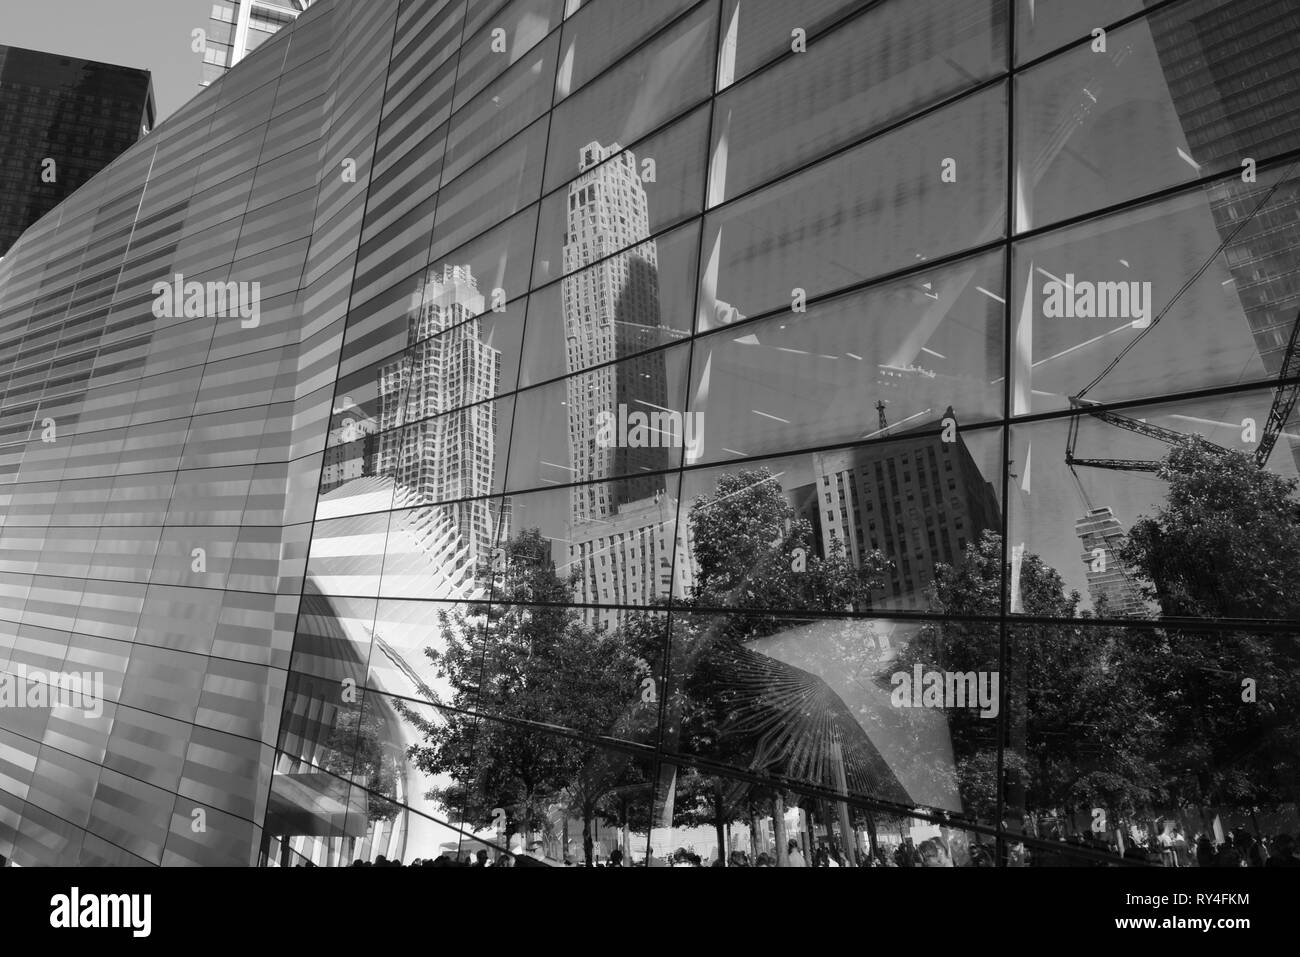 new york city - oculus reflection in window 2018 Stock Photo